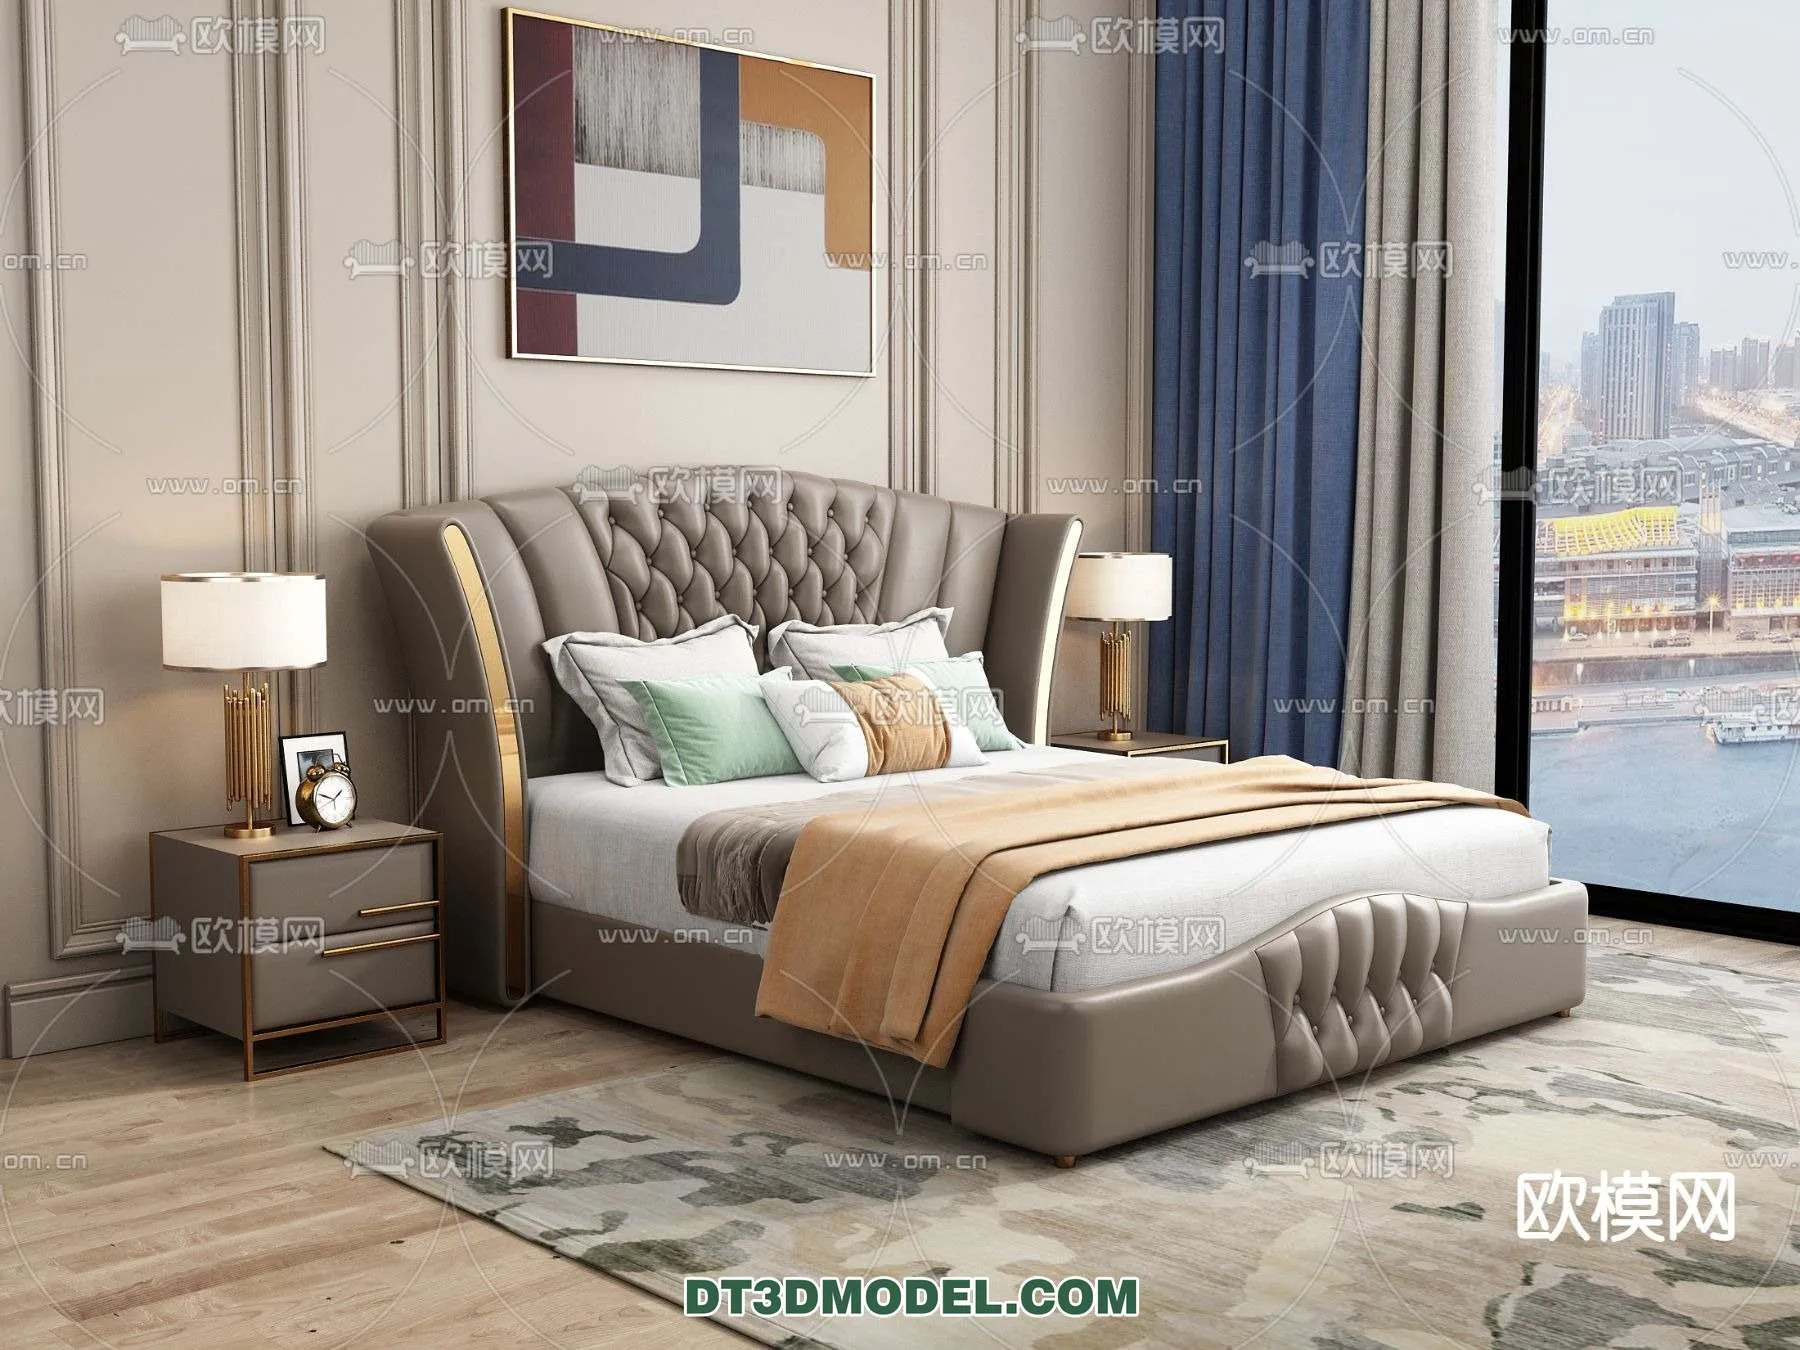 Double Bed 3D Models – 0044